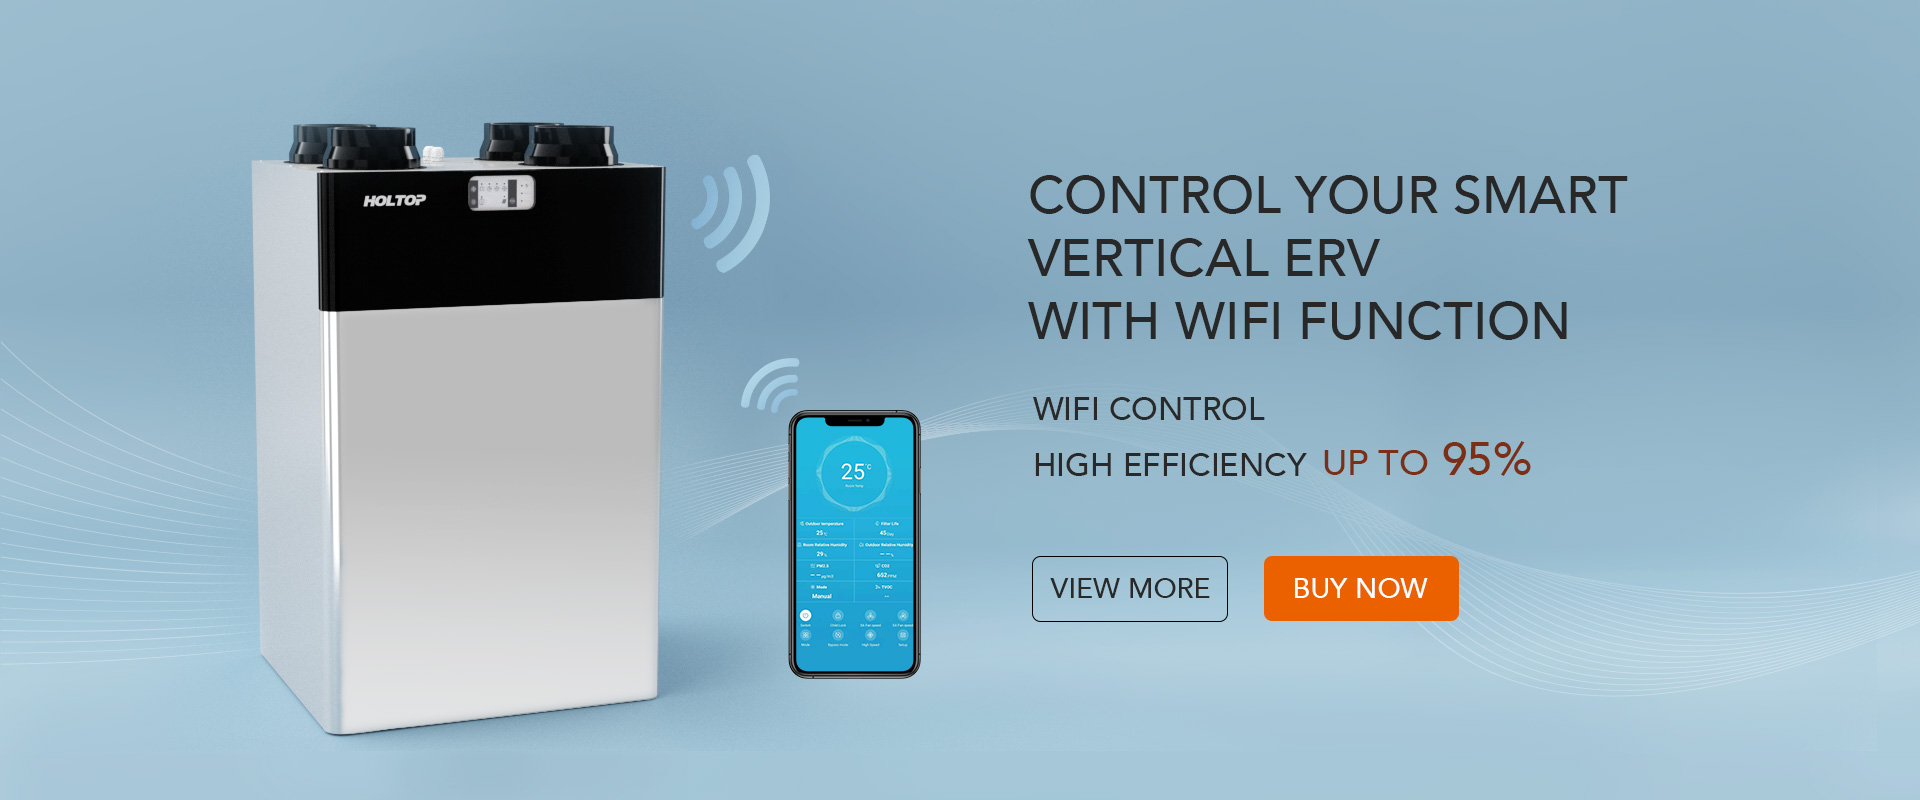 HRV vertical inteligente actualizado Holtop con función WiFi